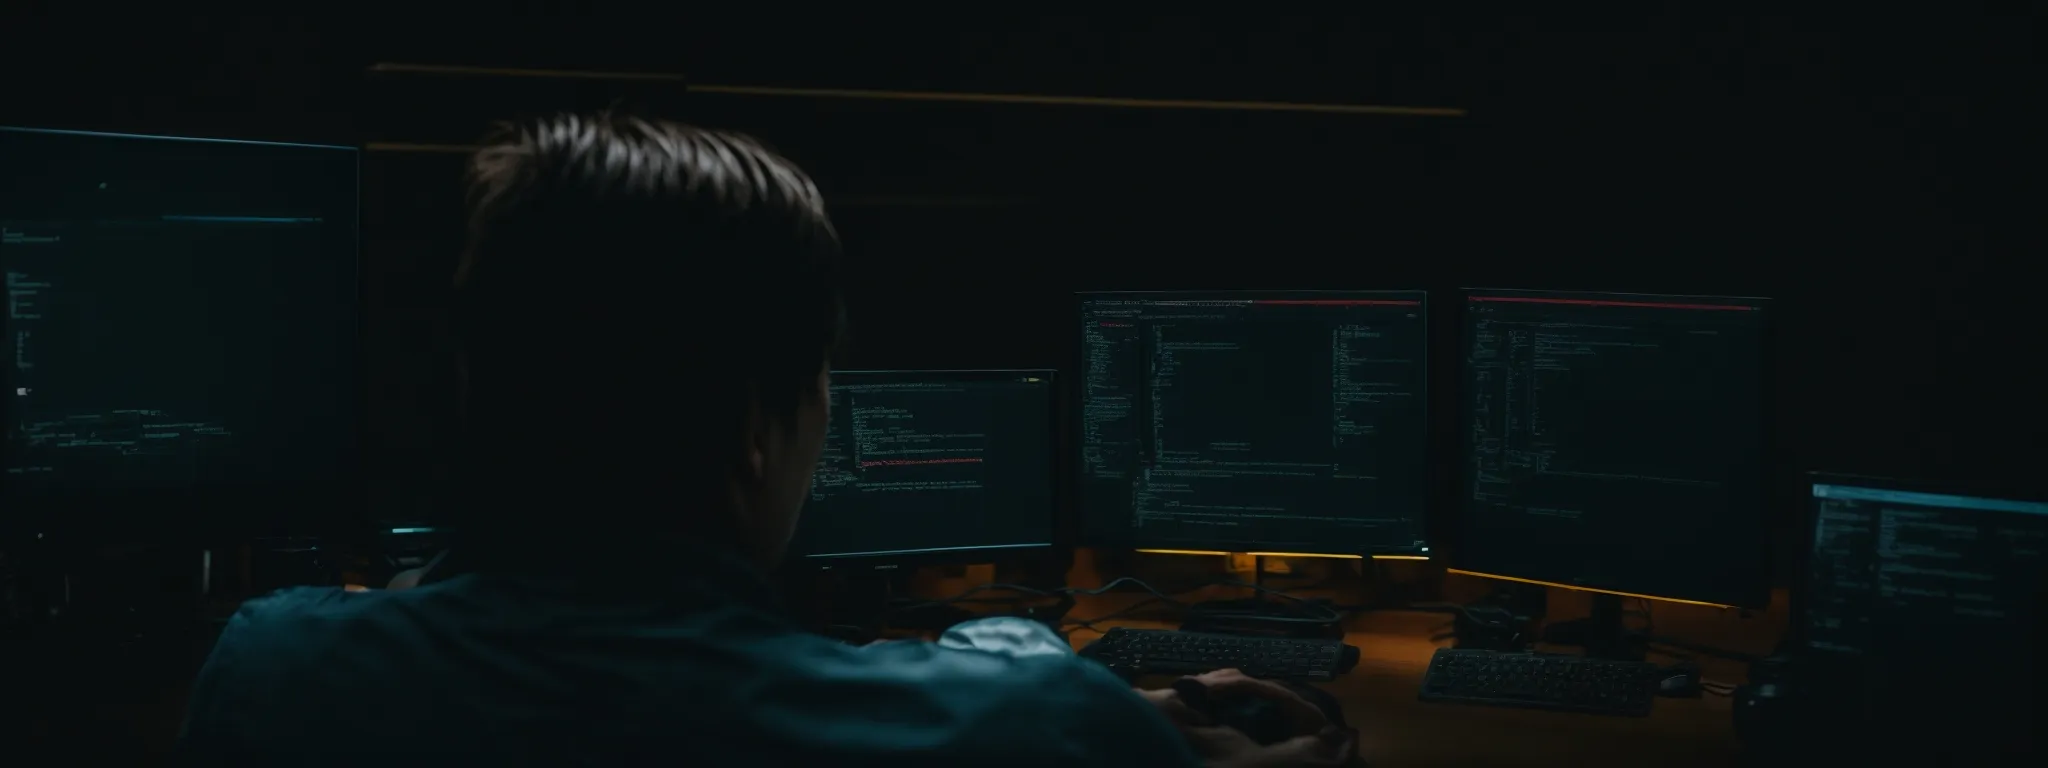 a web developer scrutinizes code on a computer screen to optimize seo performance.